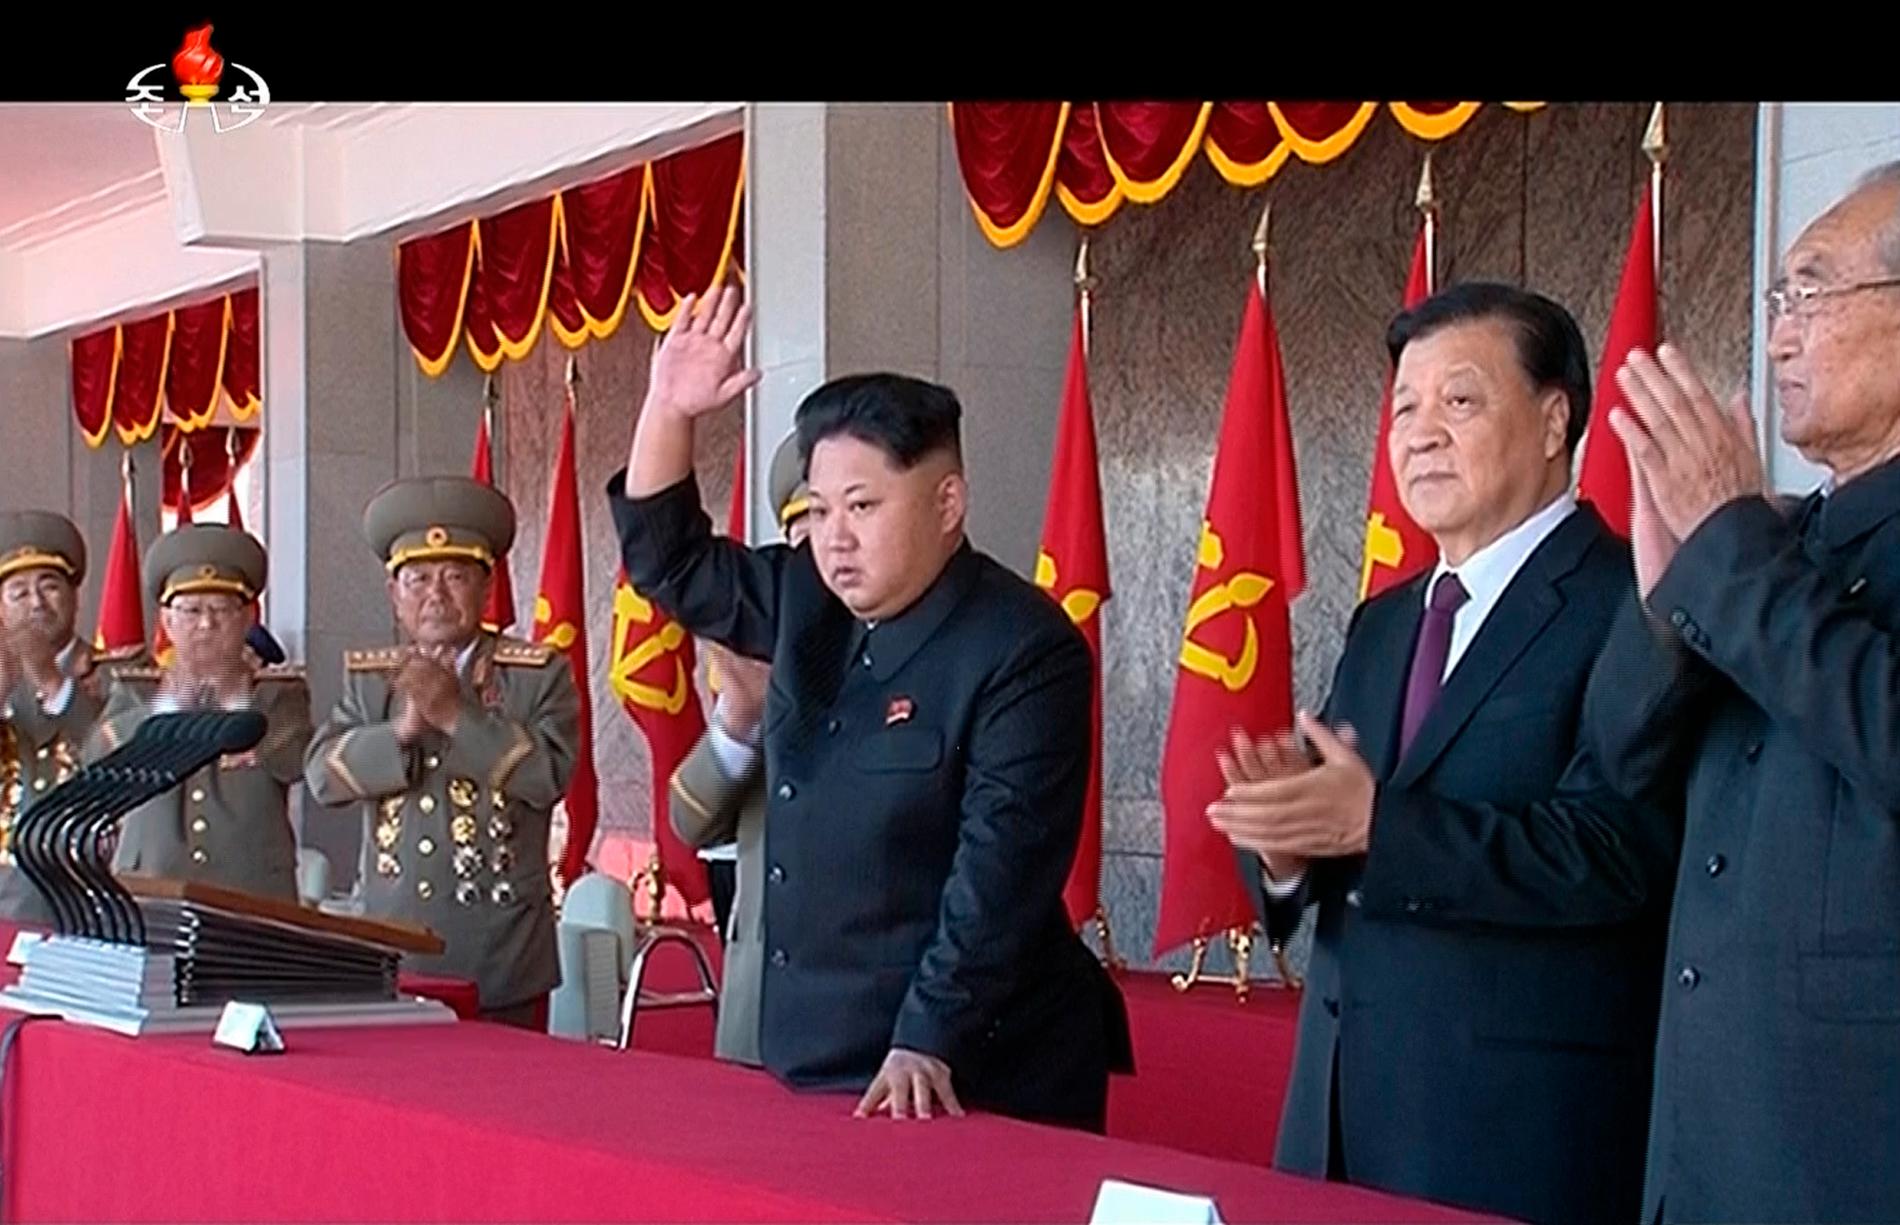 Nordkoreas ledare Kim Jong Un under firandet.